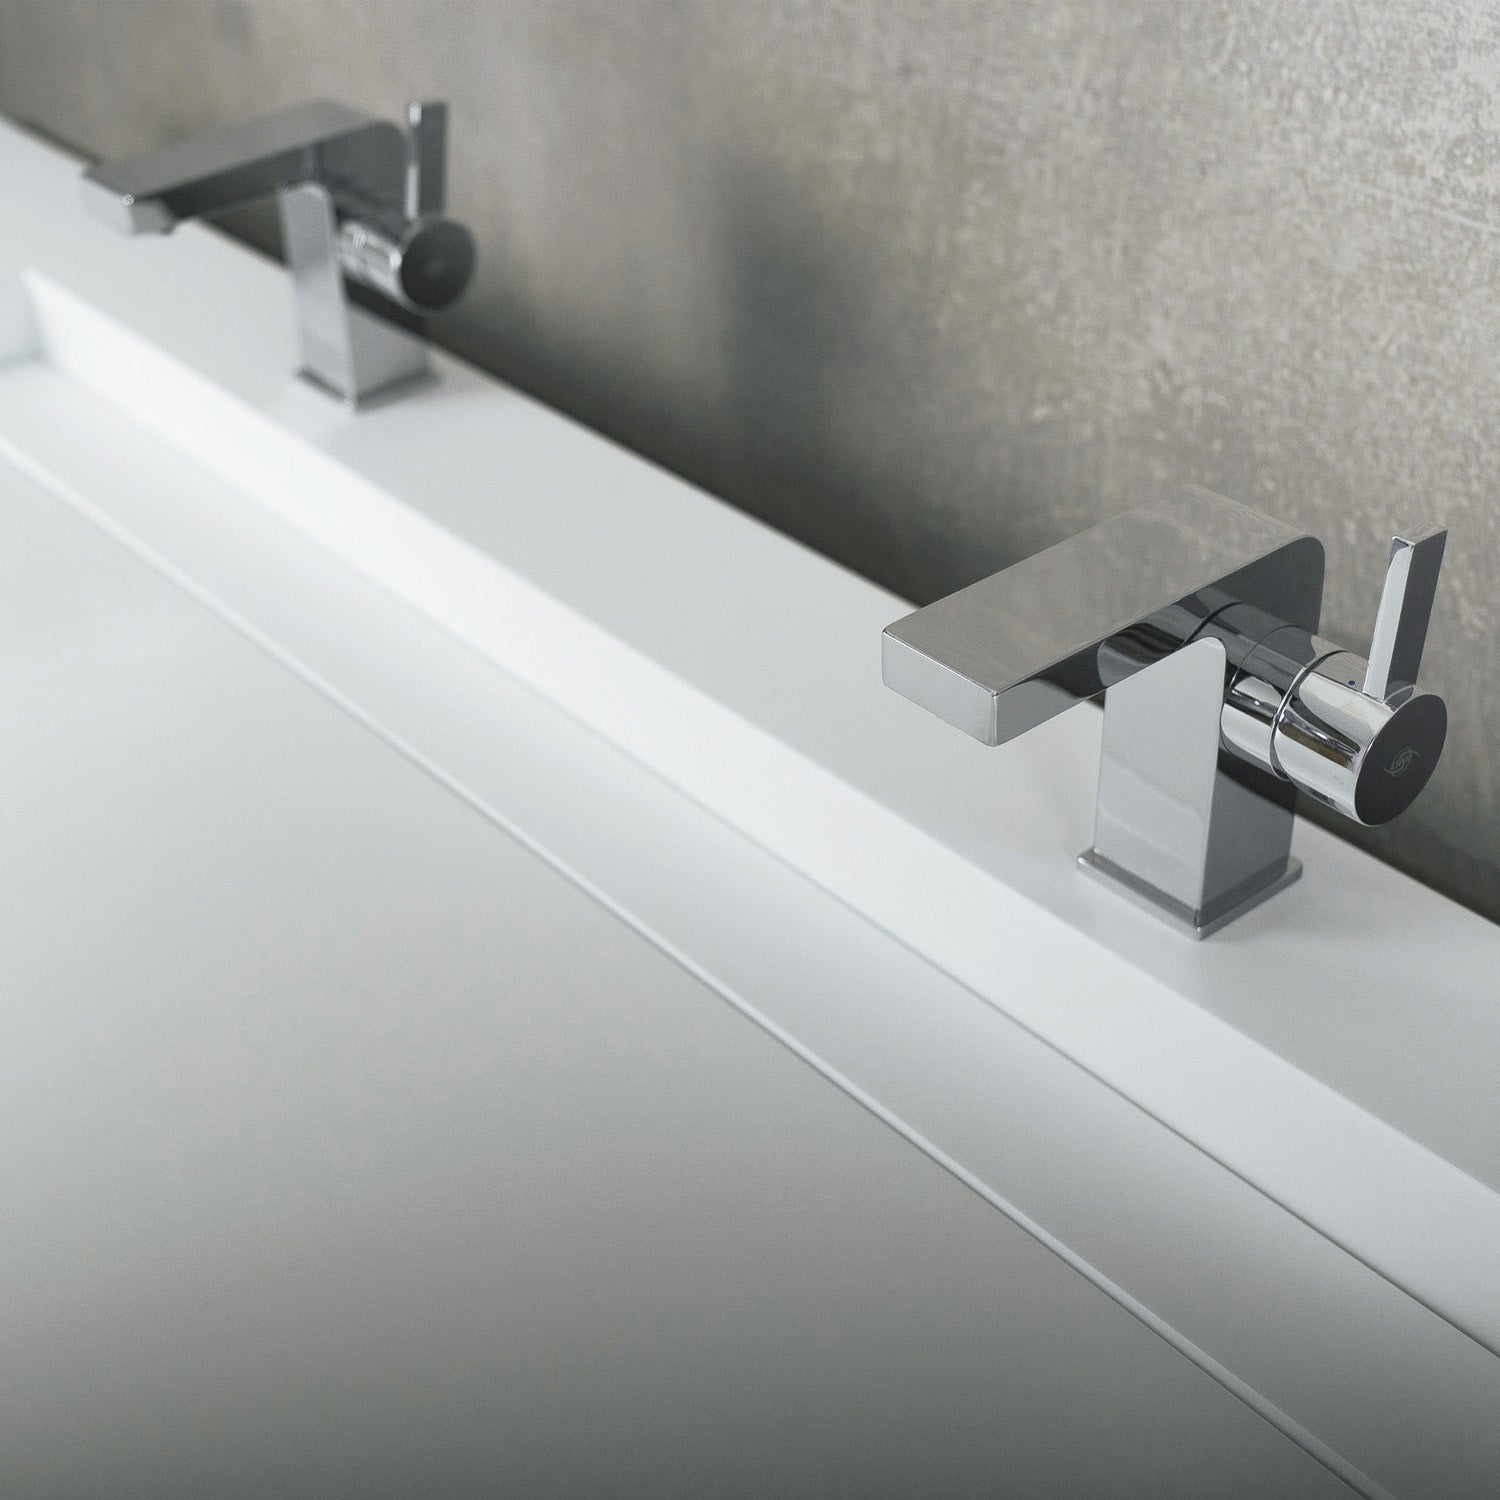 Fregadero de baño DAX de superficie sólida, rectangular, doble cuenco, montaje superior, acabado blanco mate, 62-4/5 x 18-7/8 x 4 pulgadas (DAX-AB-1371)